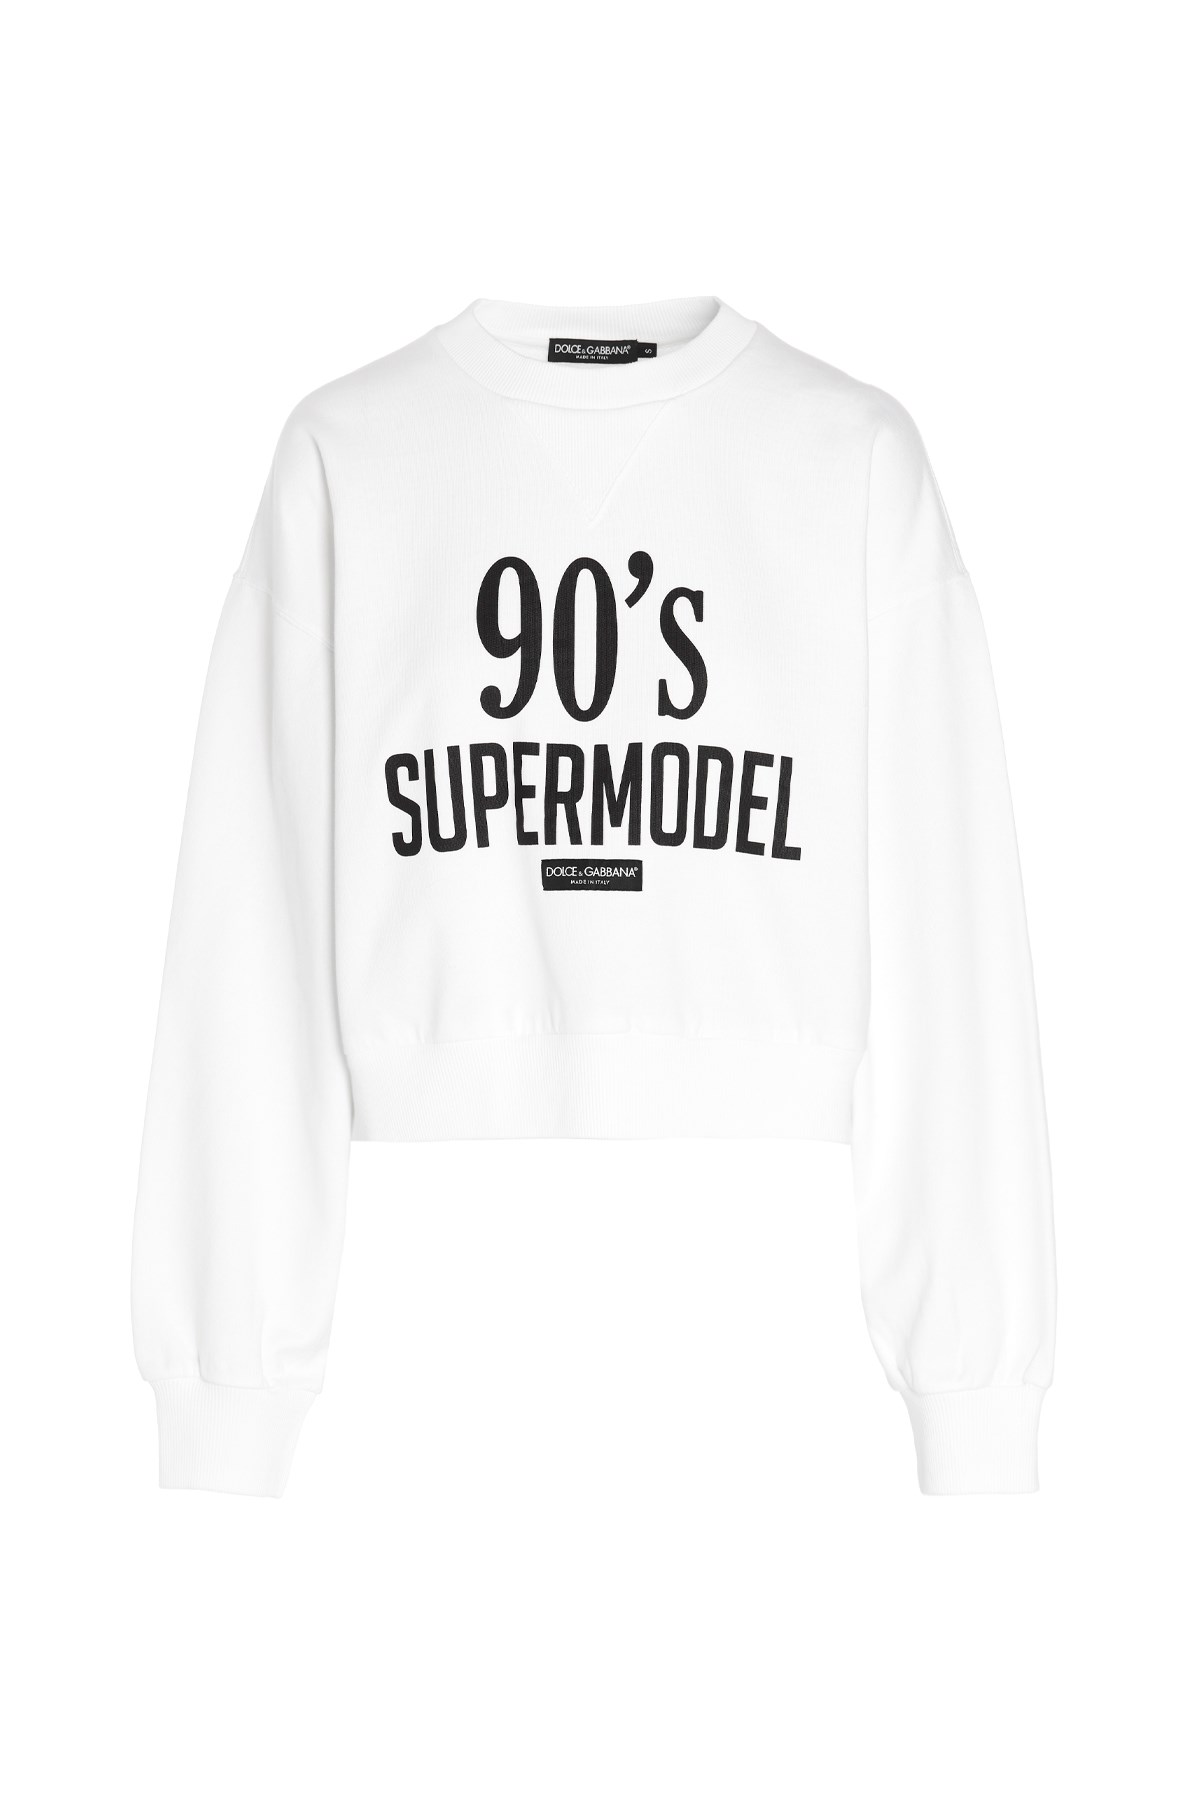 DOLCE & GABBANA '90S Supermodel' Printed Sweatshirt